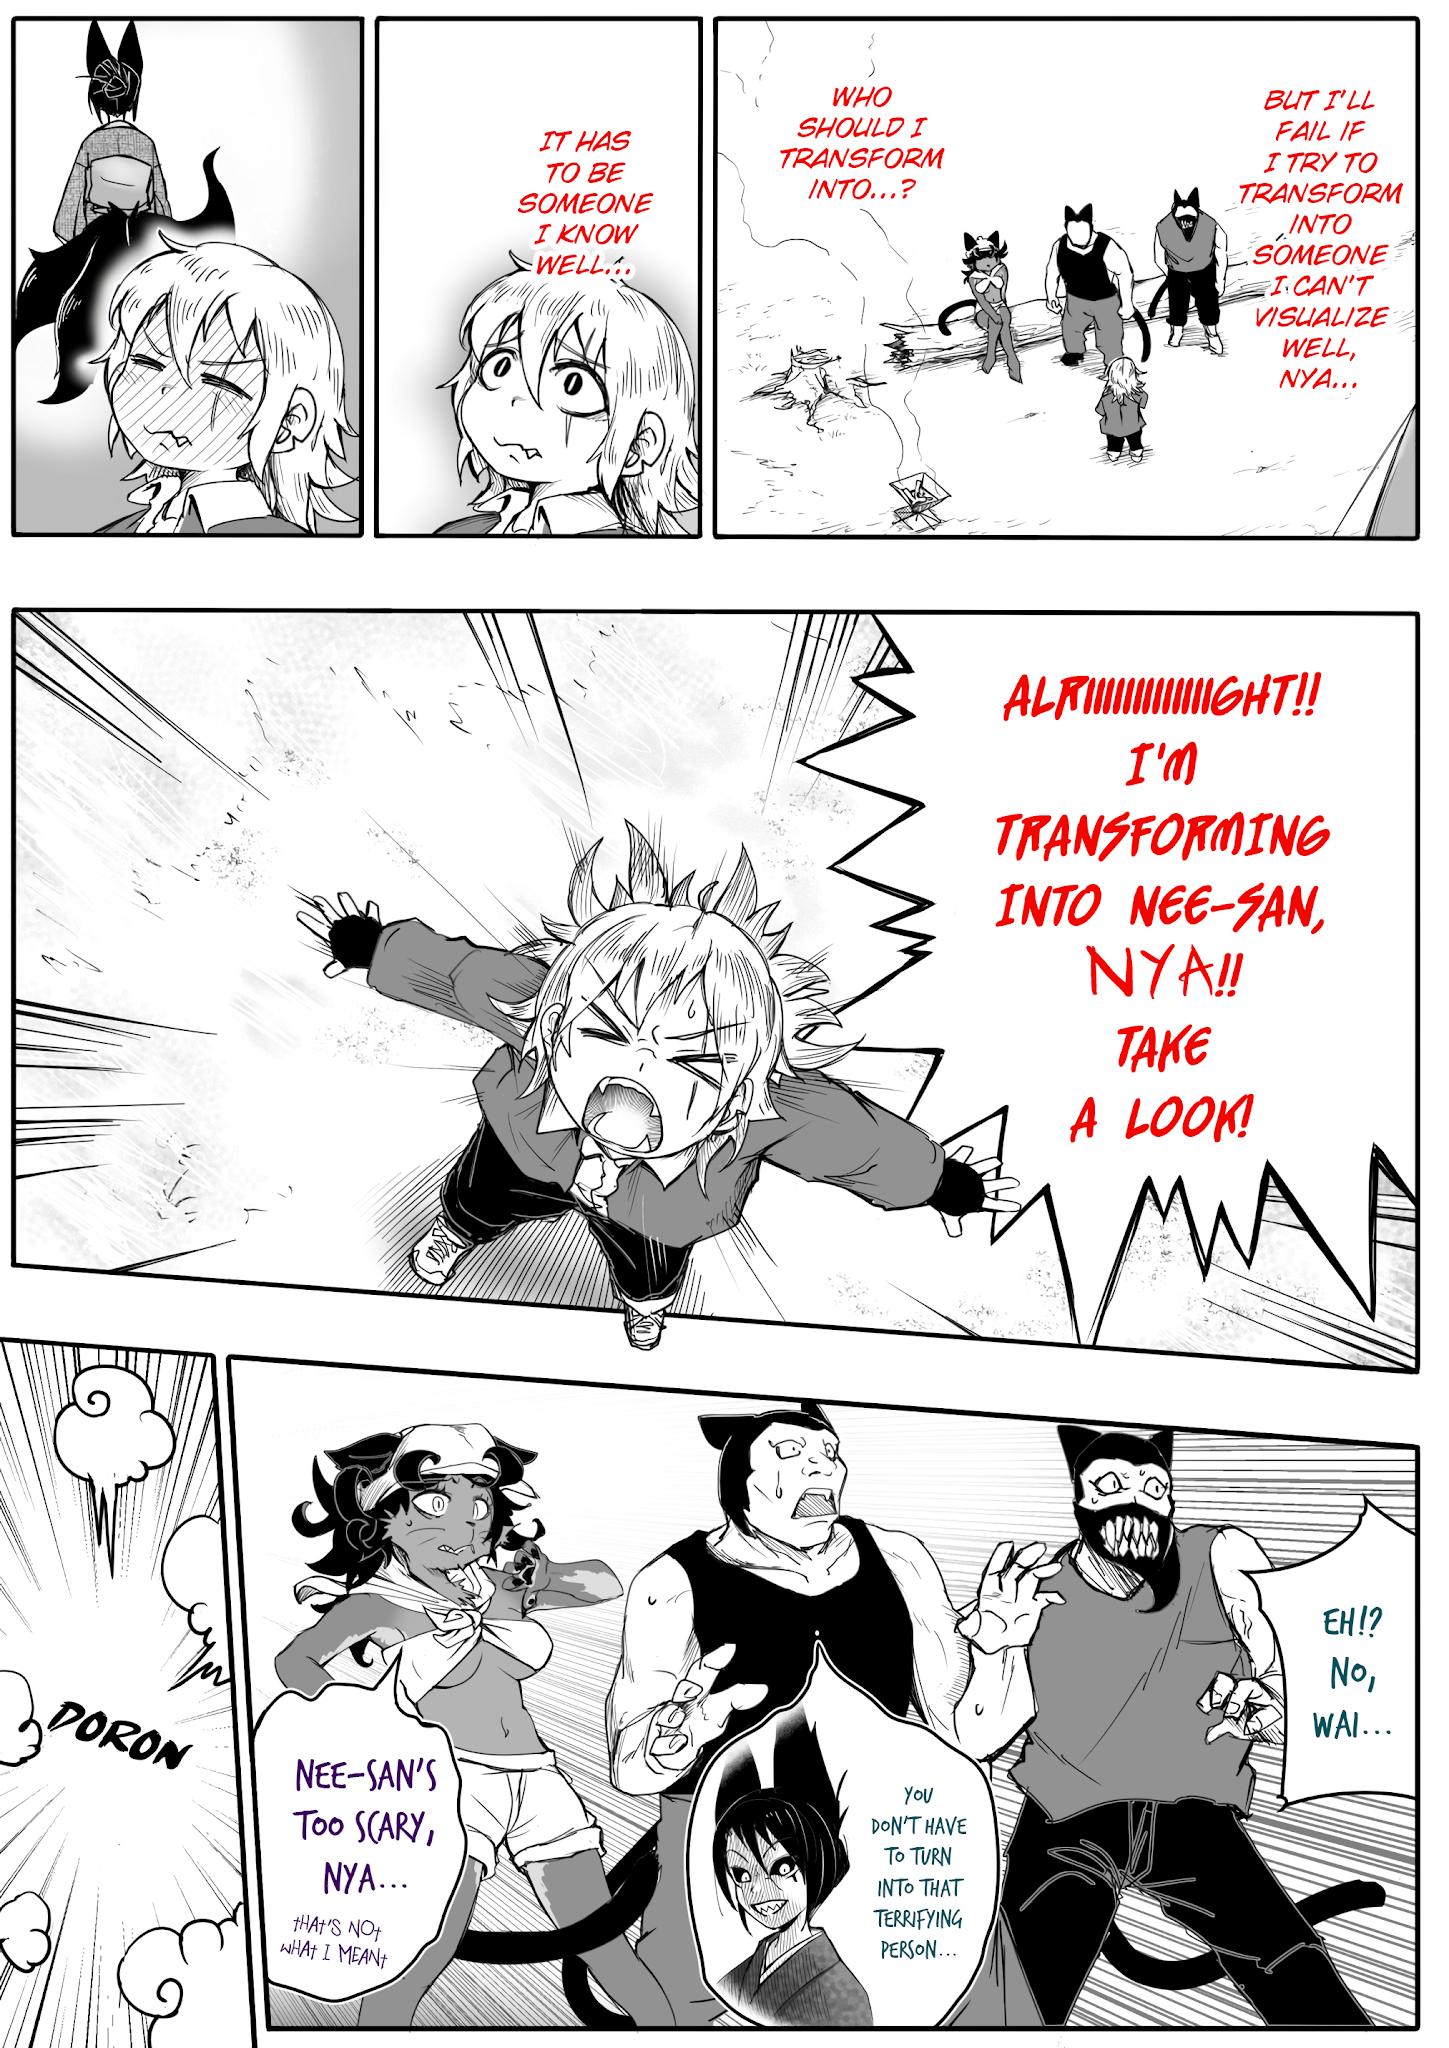 Kitsune Spirit Chapter 115 page 3 - Mangakakalots.com